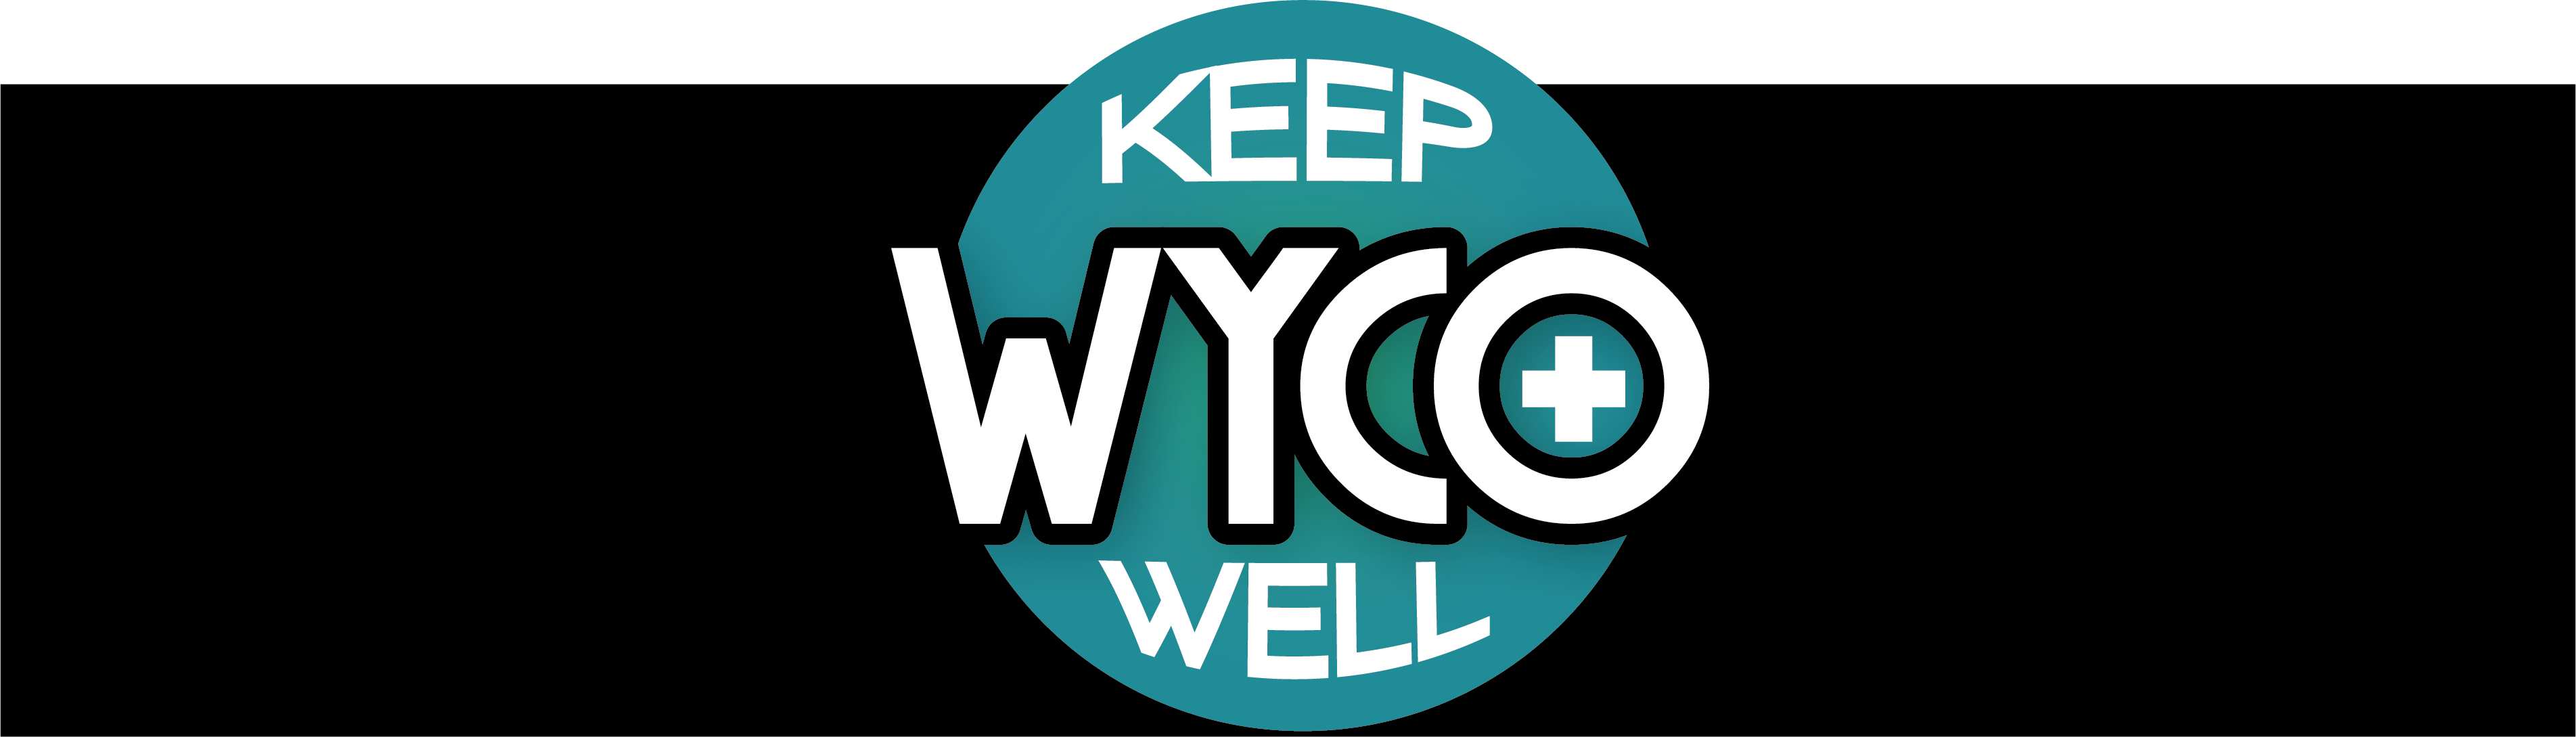 Keep WYCO Well Header 2